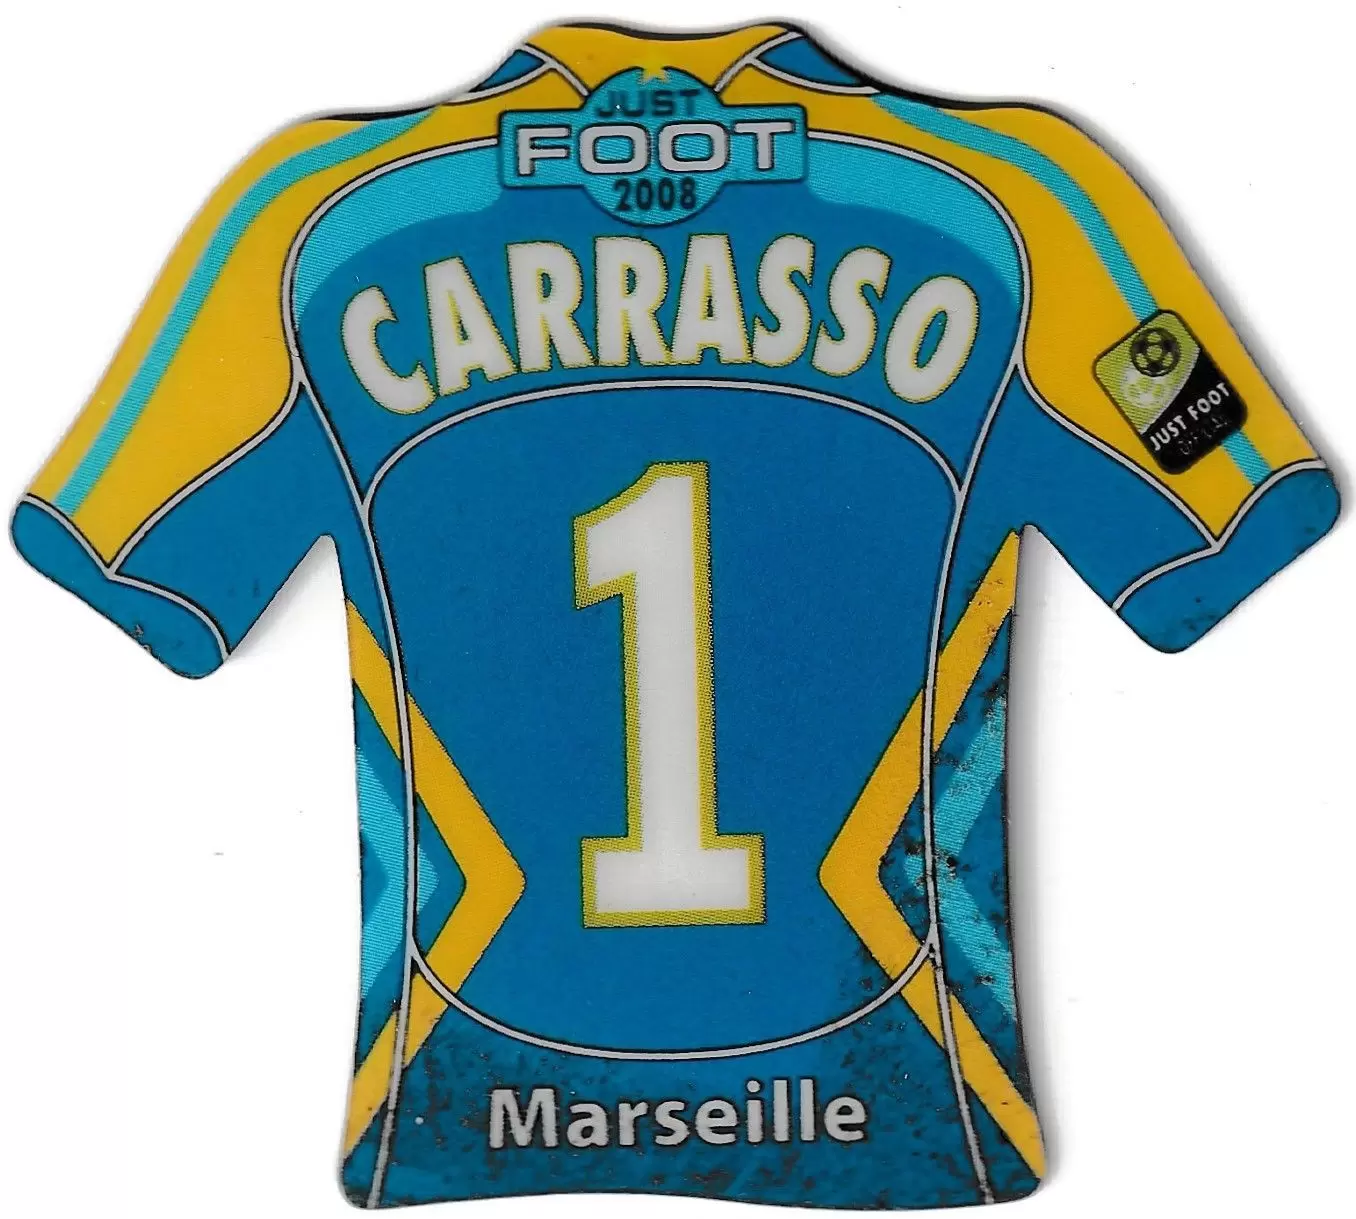 Just Foot 2008 - Marseille 1 - Carrasso